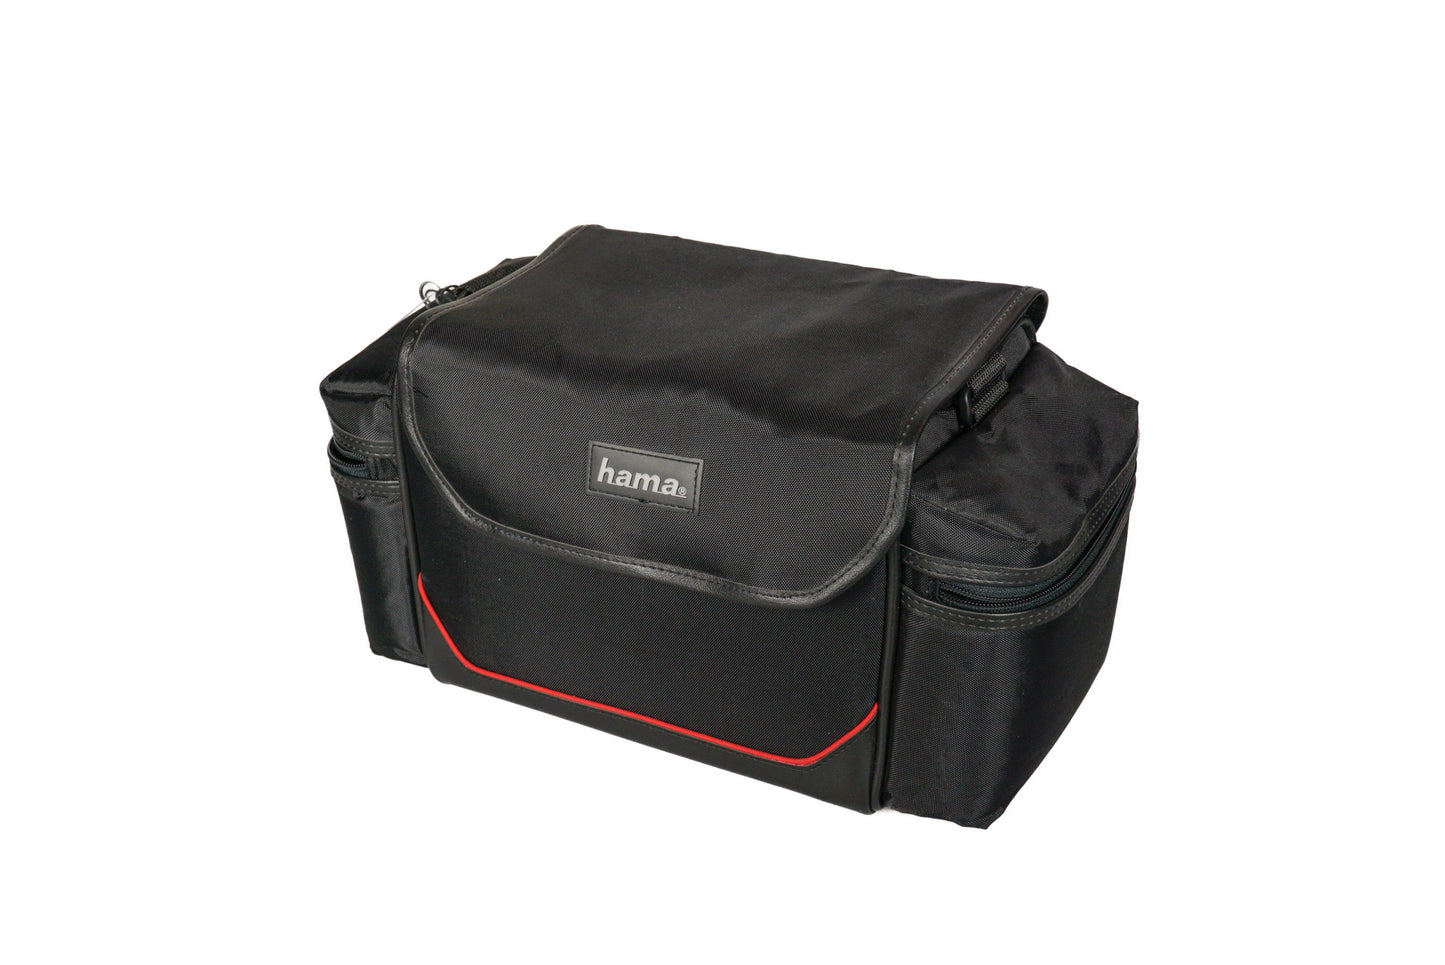 Hama Camera Bag - Accessory